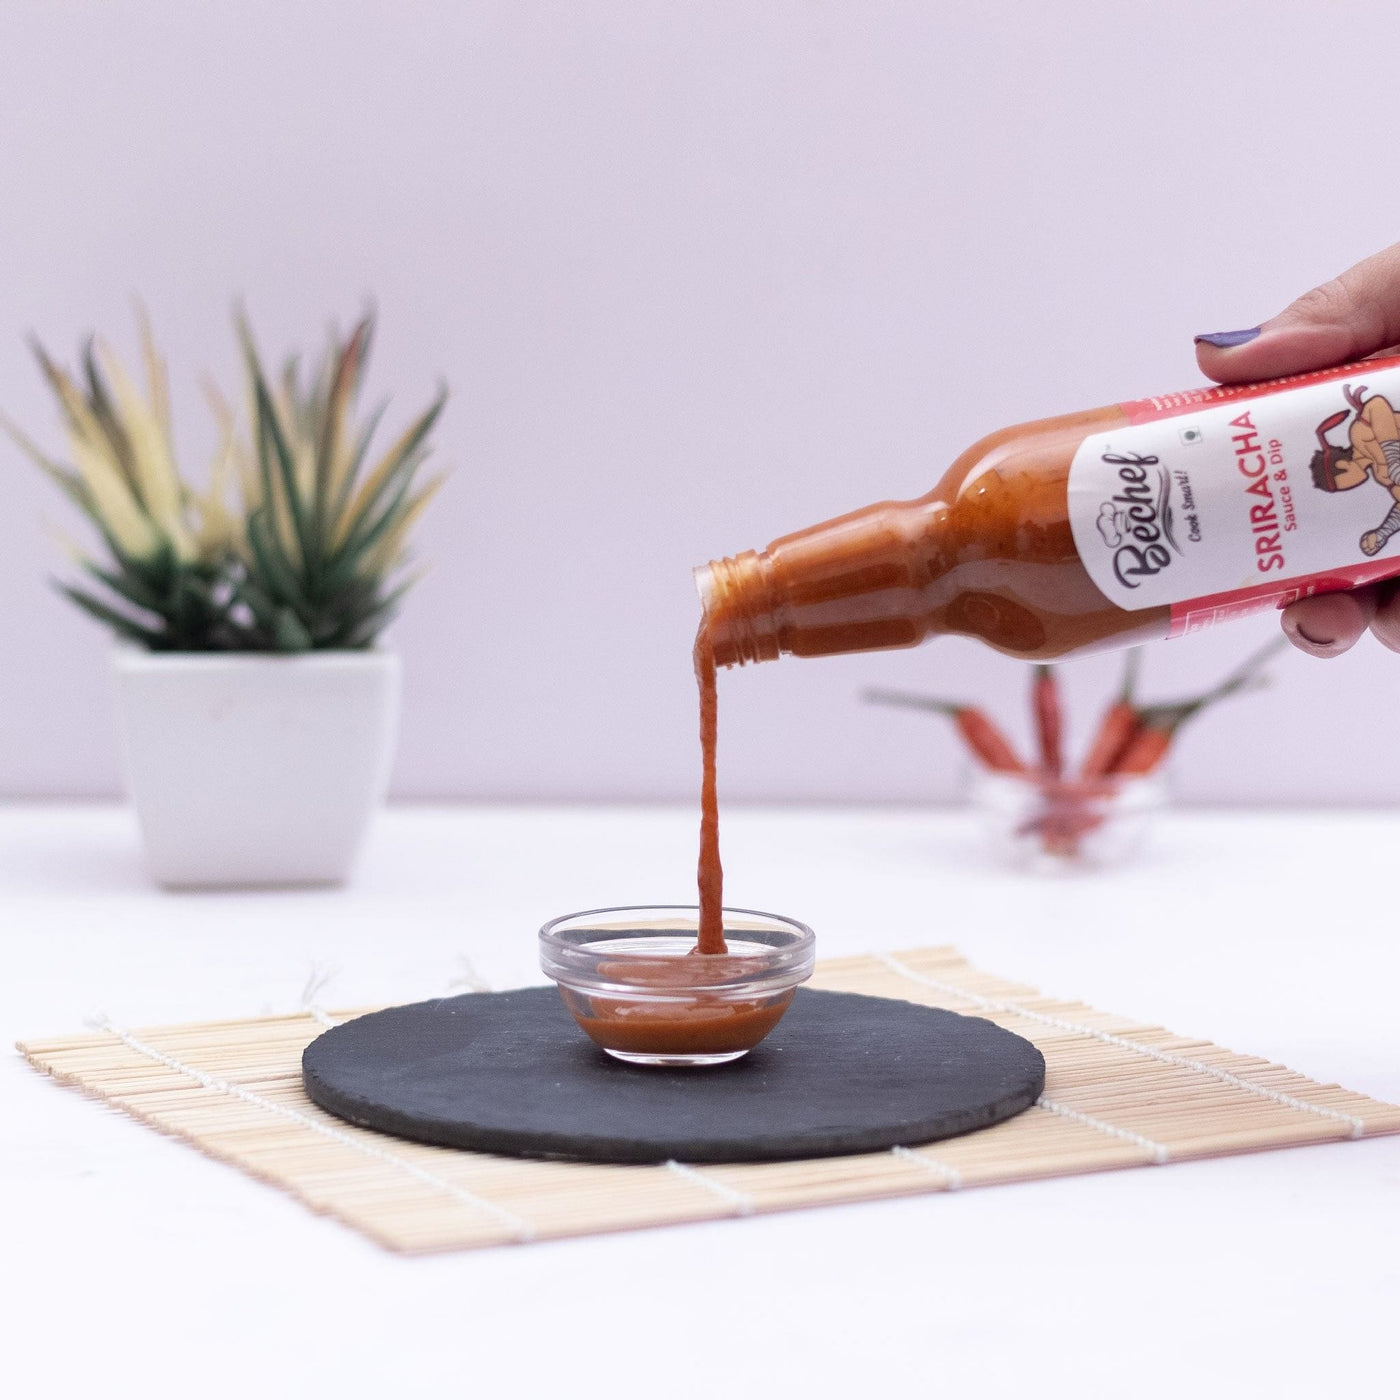 Sriracha Sauce - Bechef - Gourmet Pantry Essentials